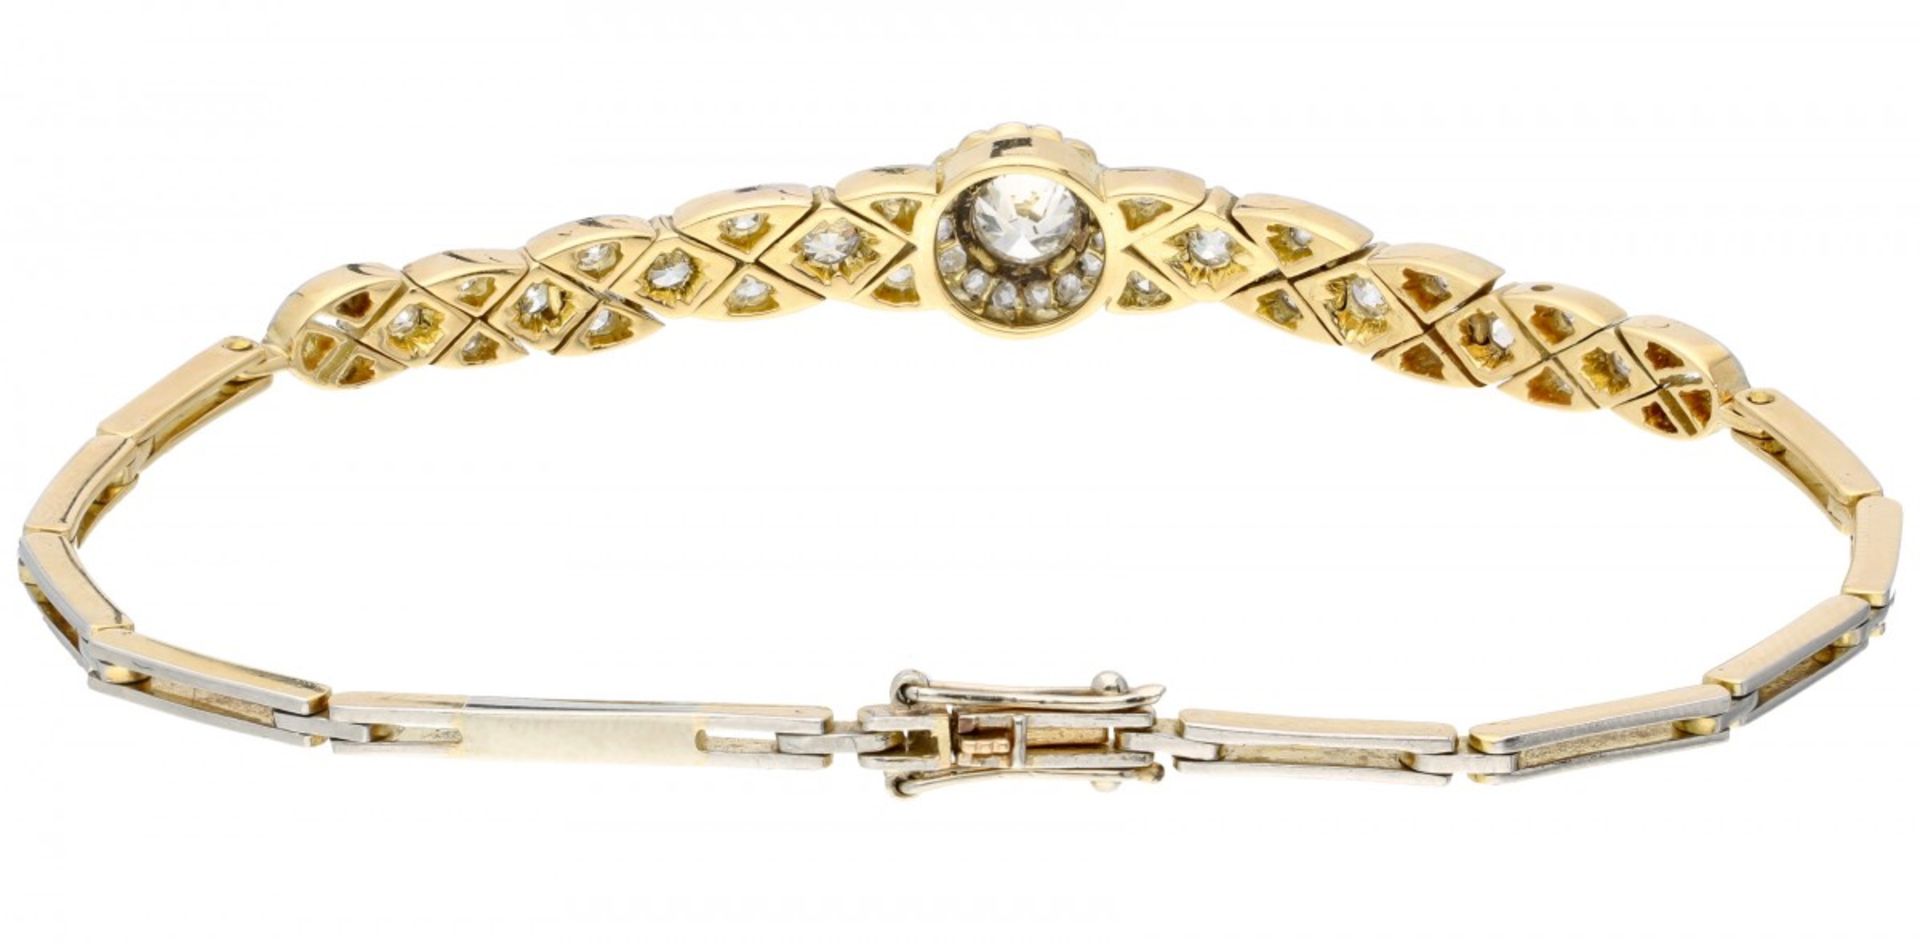 Bicolor gold Art Deco bracelet set with approx. 0.88 ct. diamond - 18 ct. - Image 3 of 3